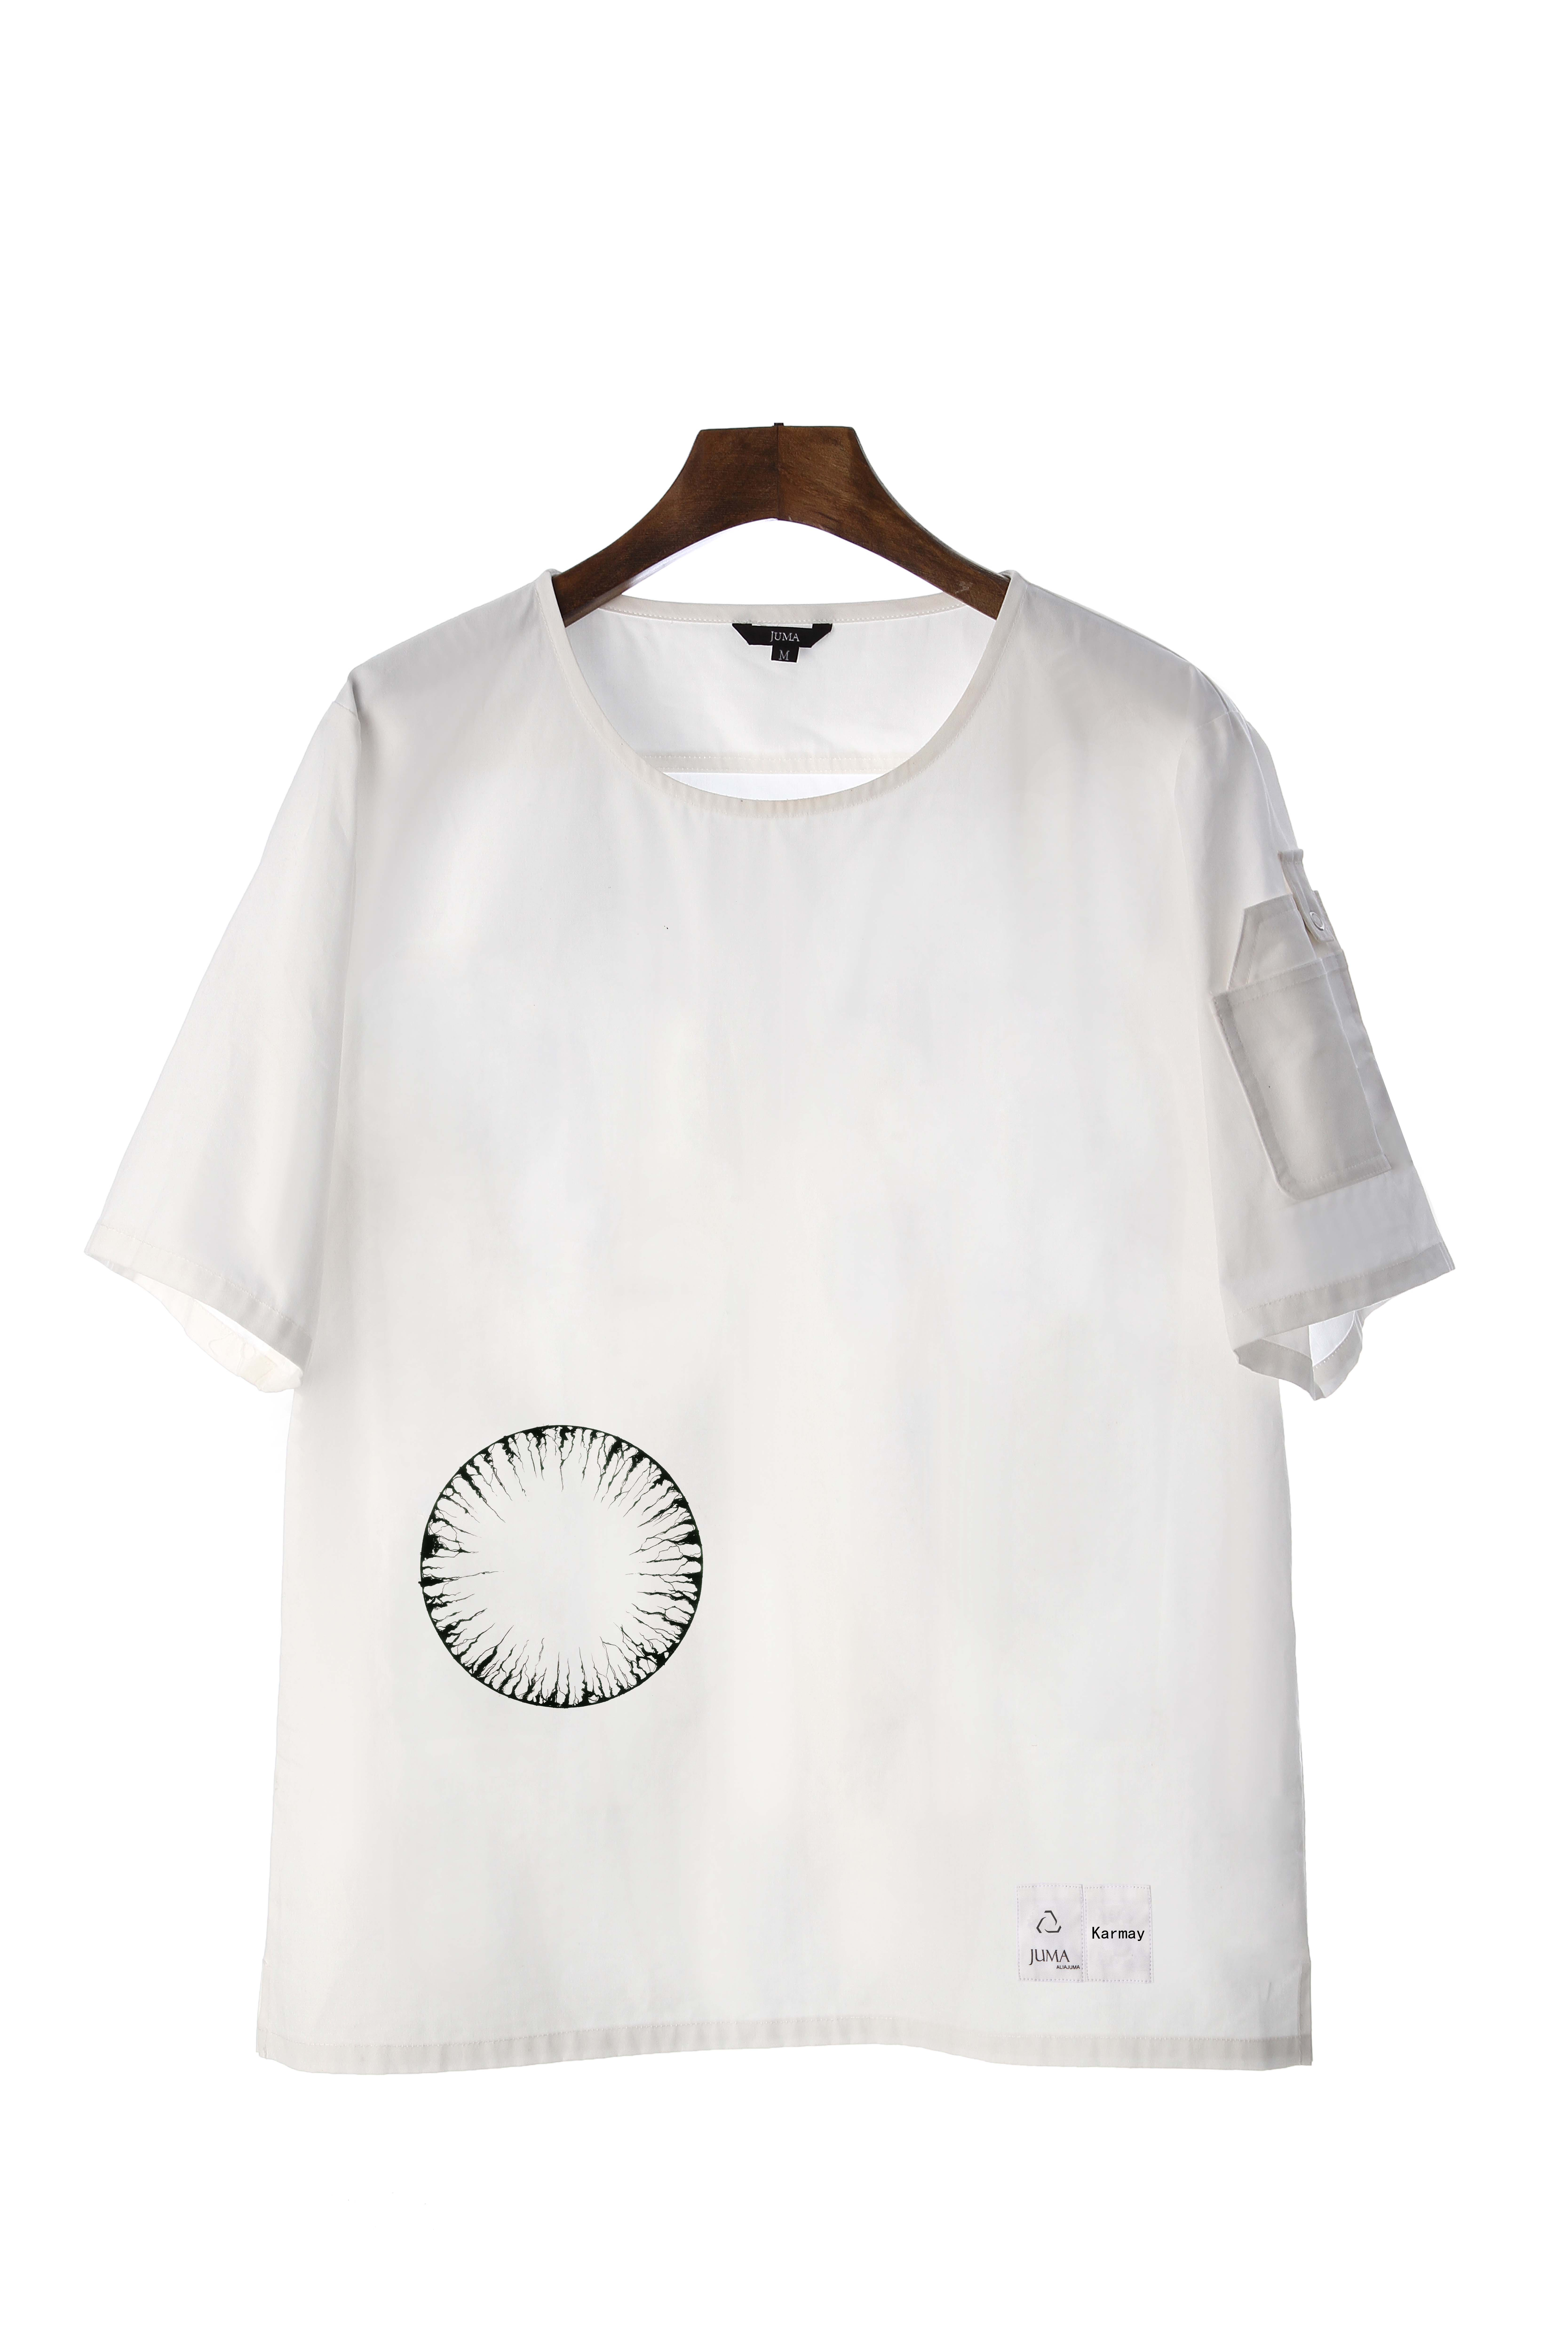 Z+B 印花短袖衬衫 - 4 个再生水瓶 - 白色｜Z+B Printed Short Sleeve Shirt - 4 Recycled Water Bottles - White